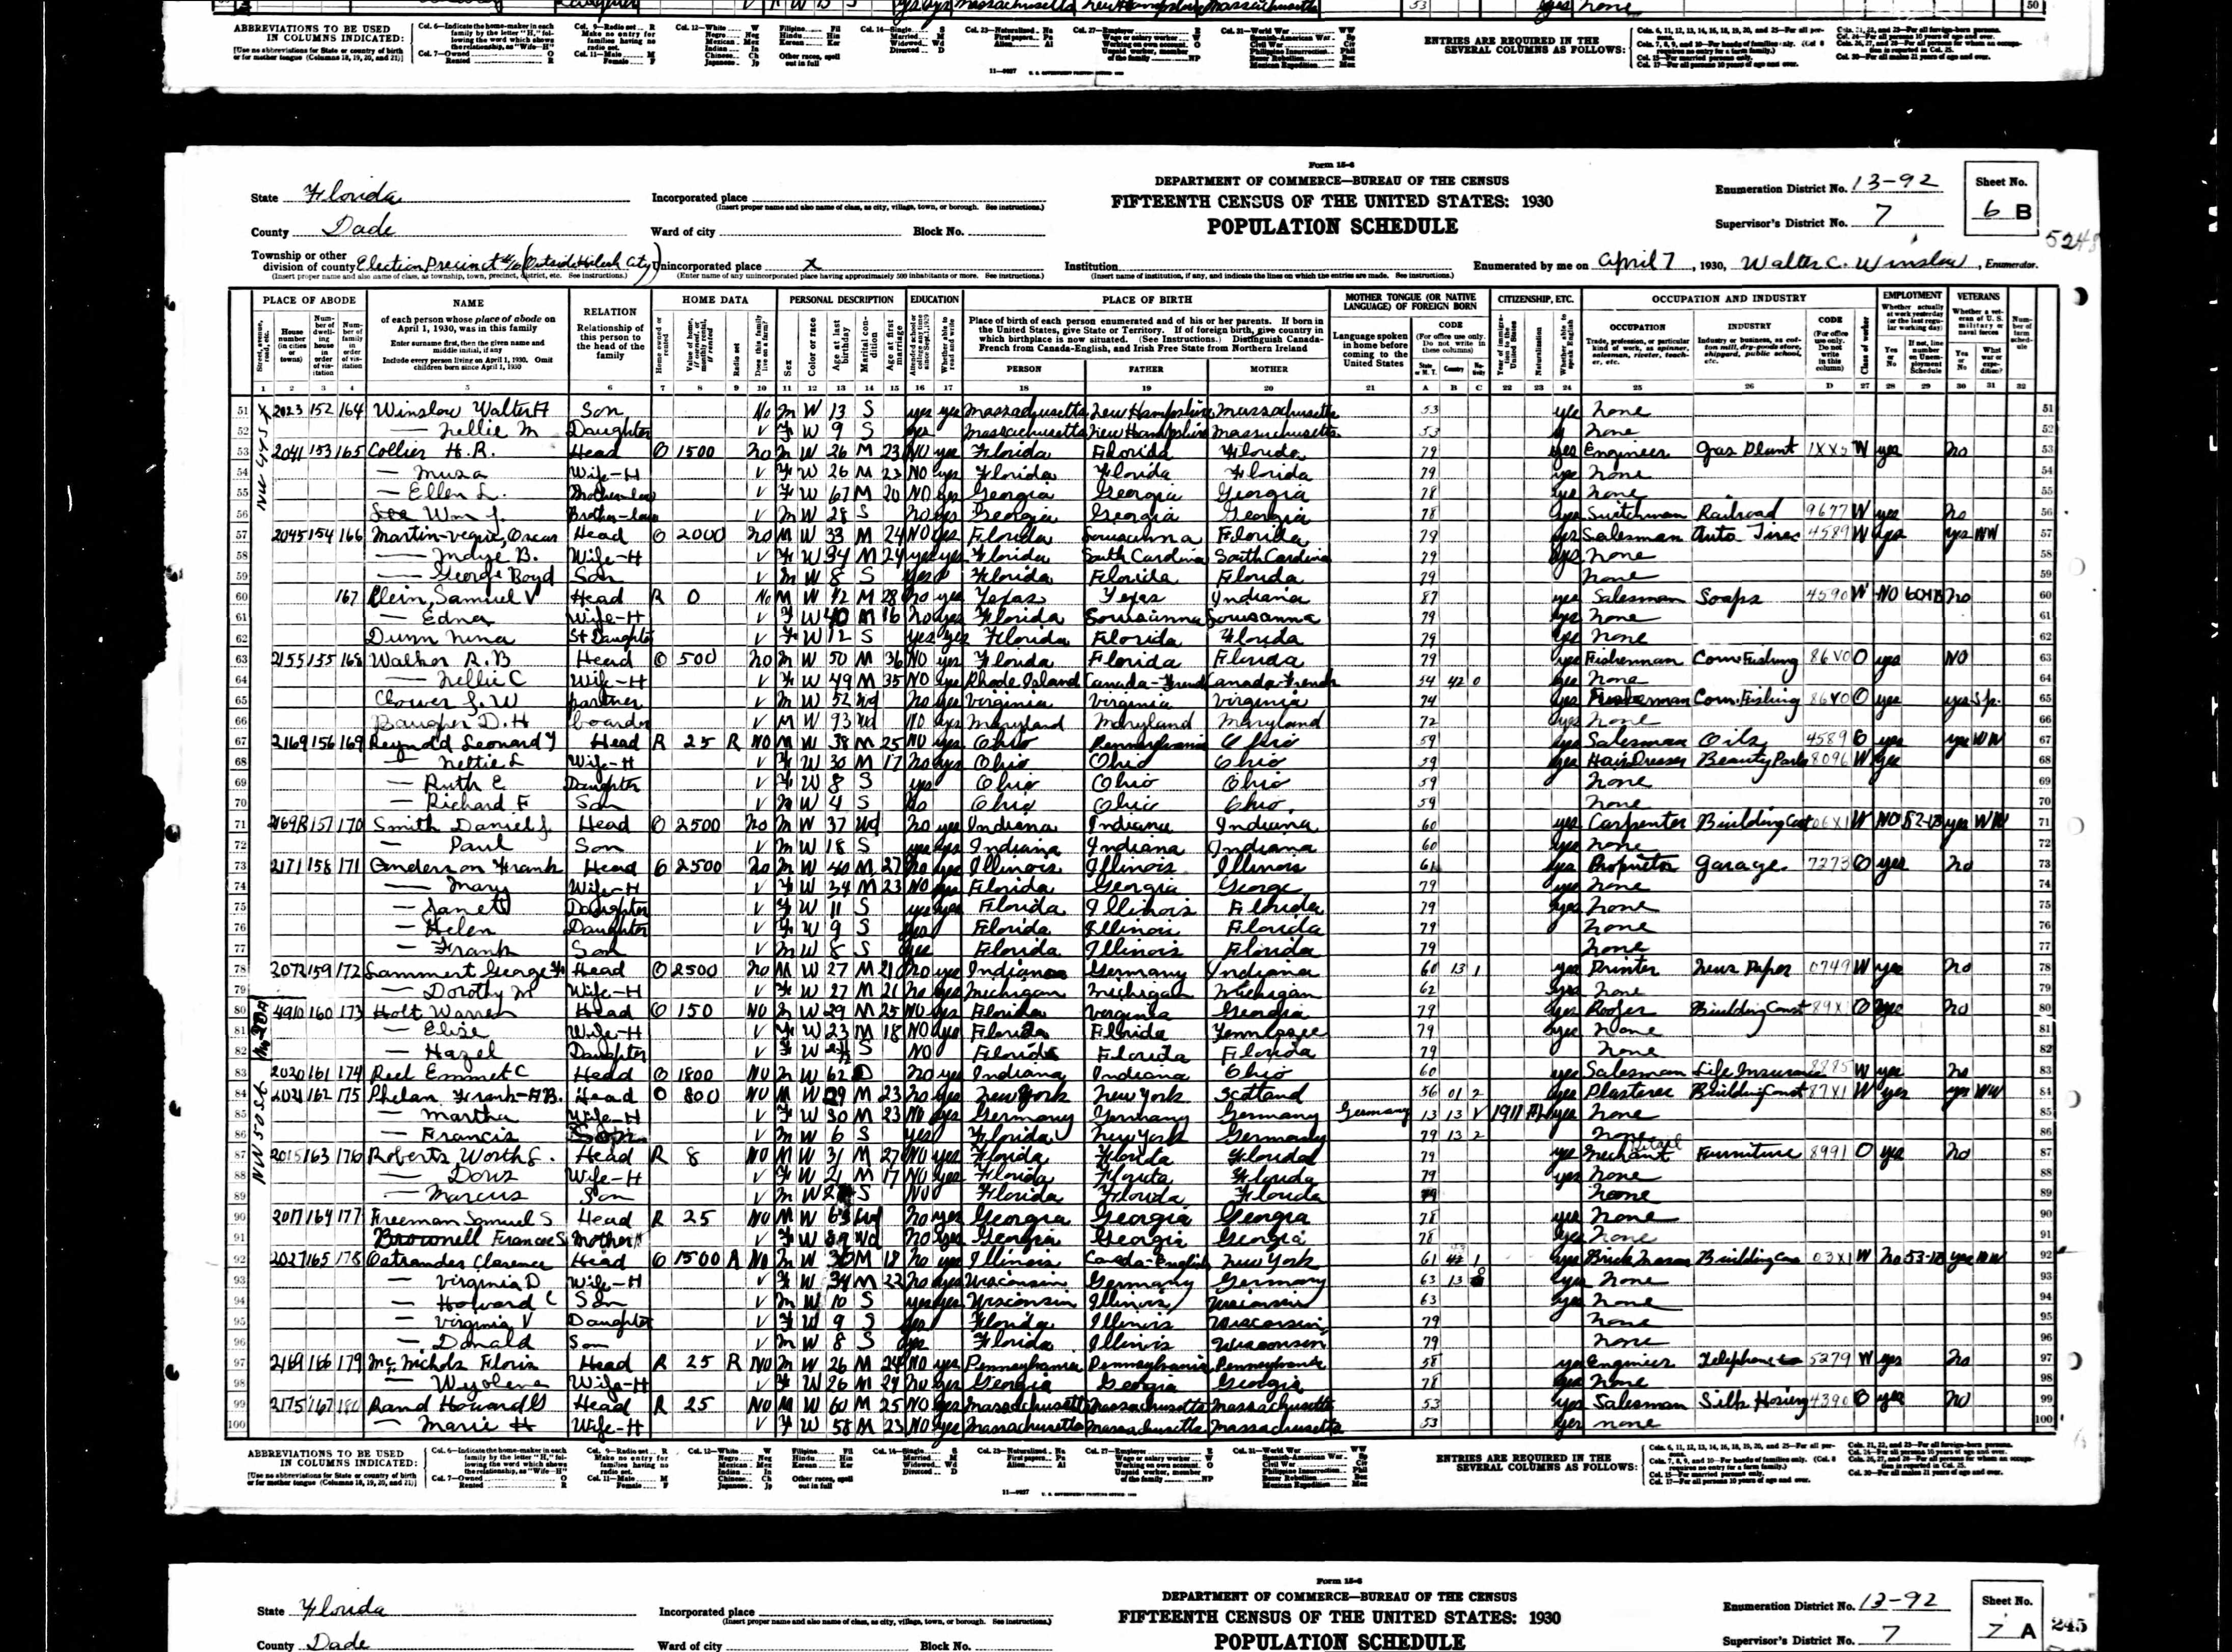 1930 US Census, Clarence Ostrander, line 92